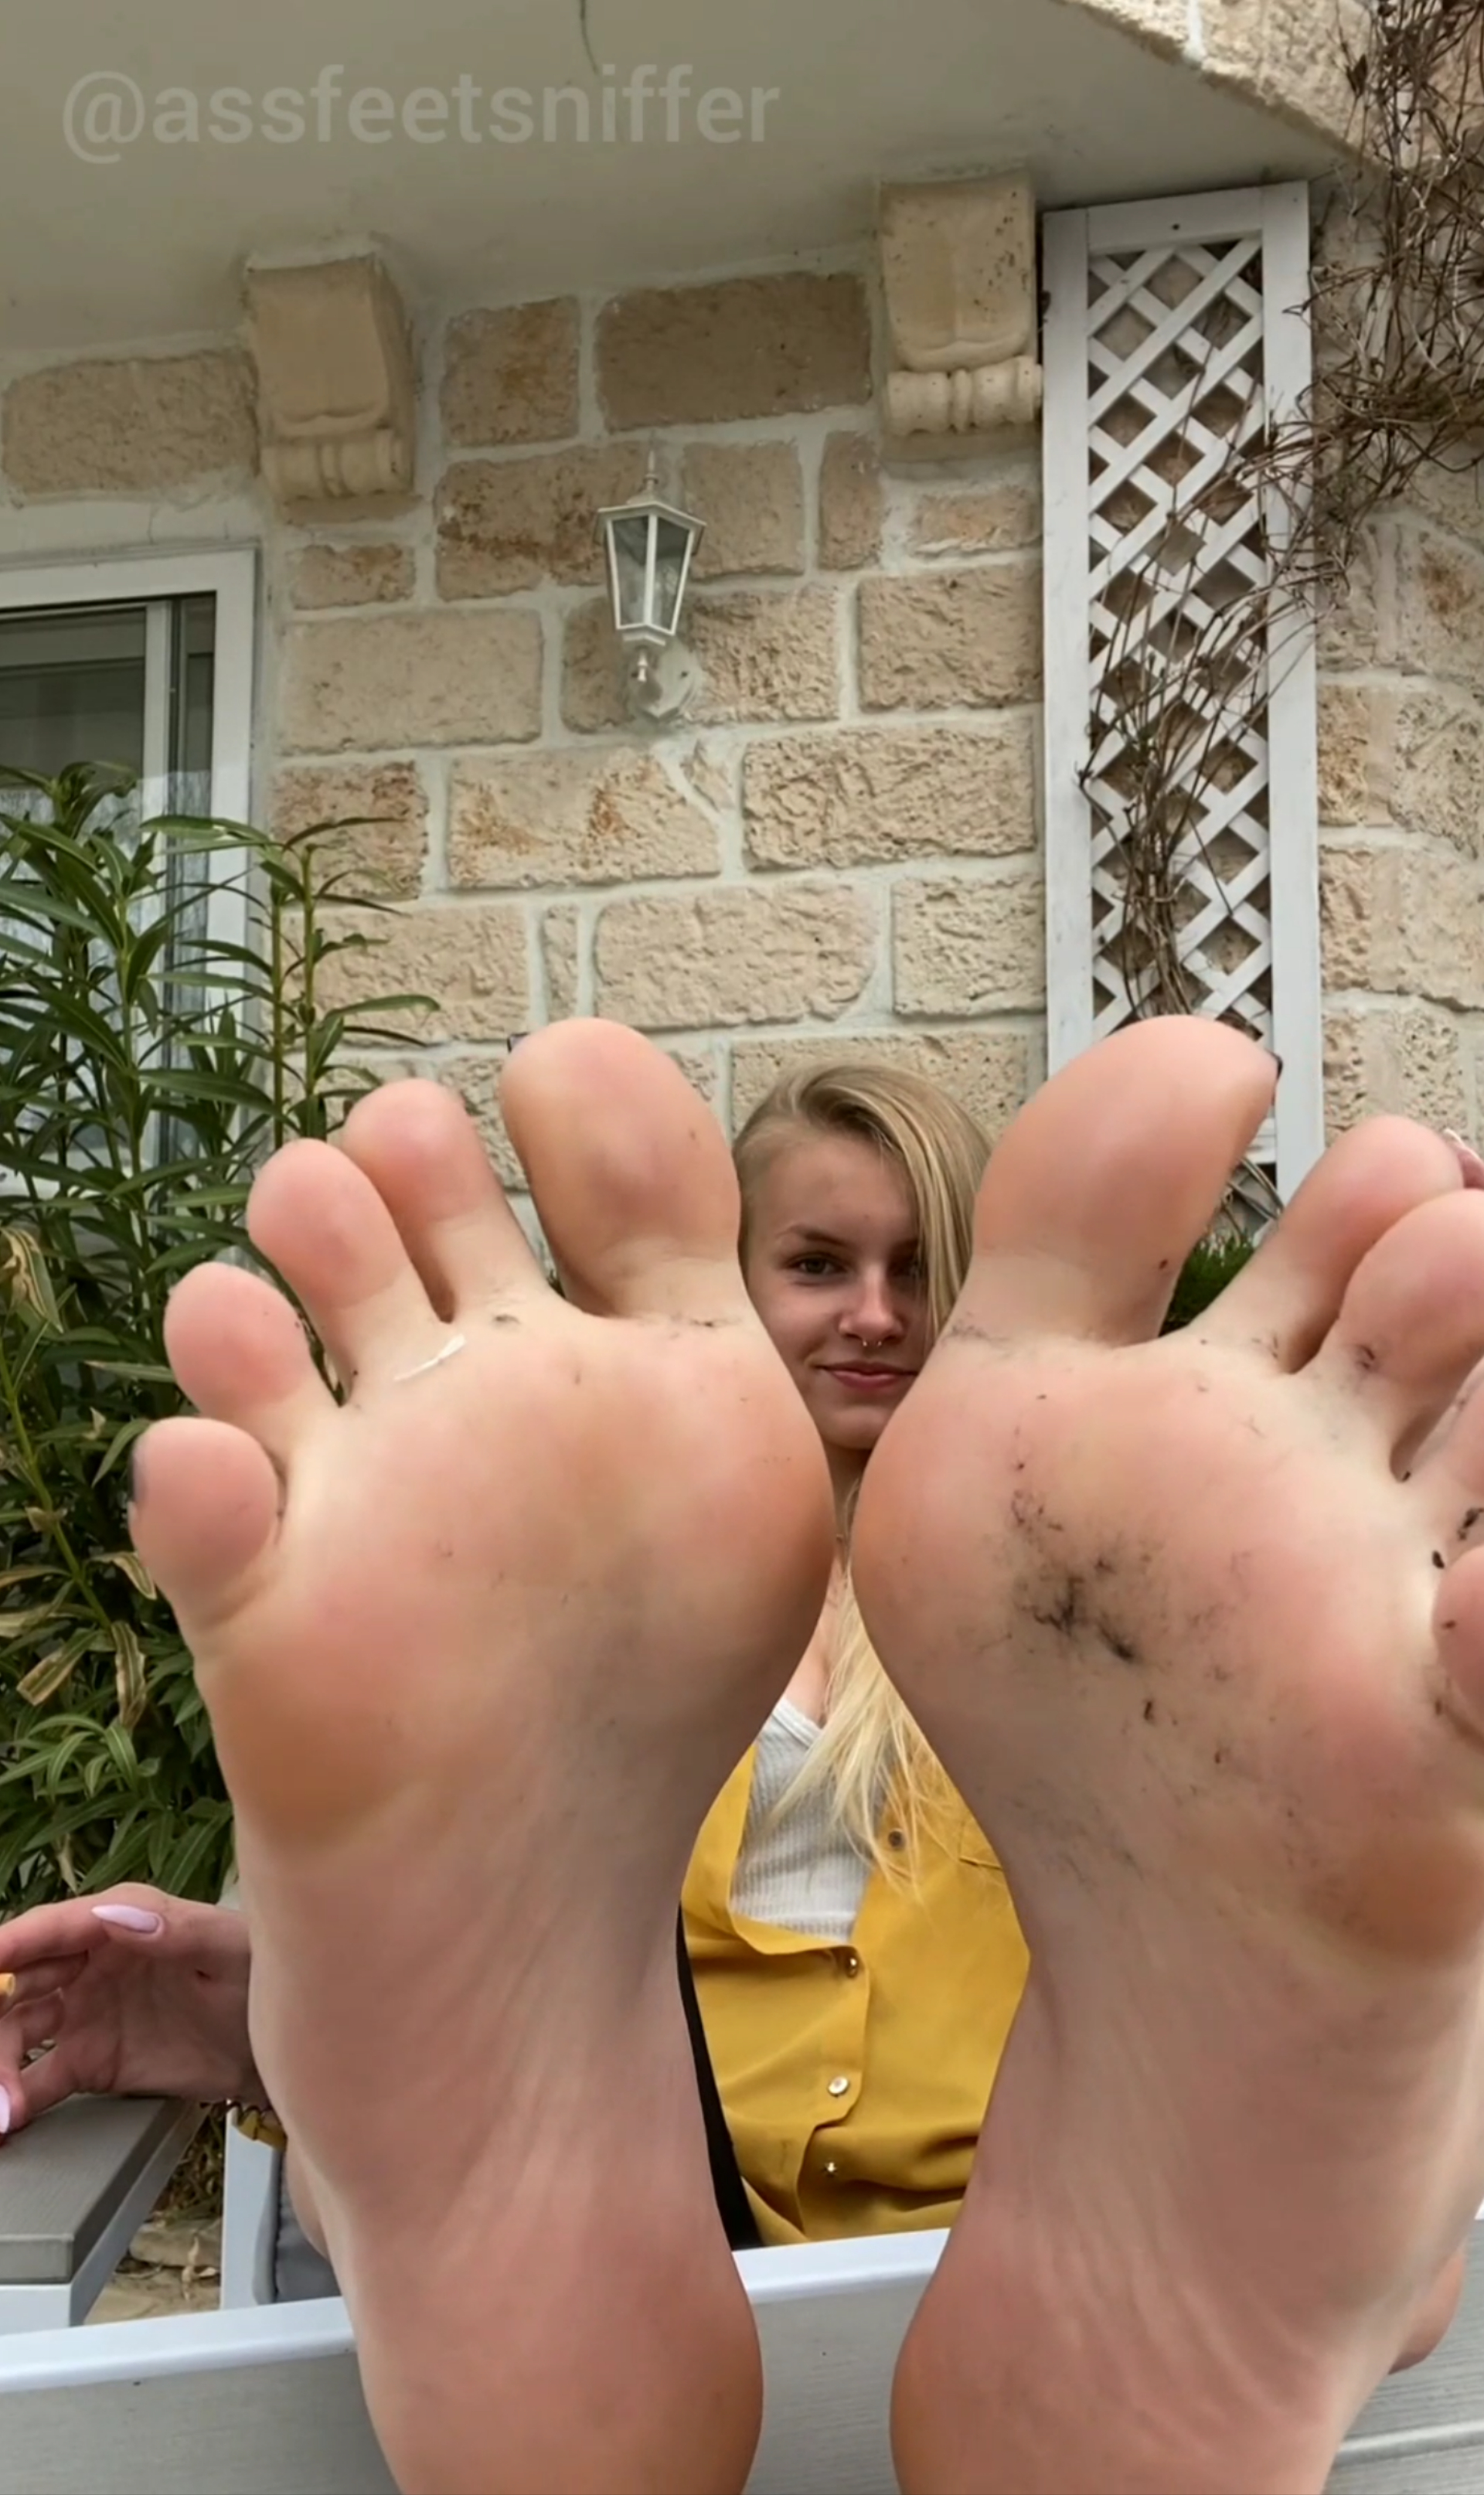 Girls Stinky Bare Feet - Blonde Girl Stinky Feet And Dirty Socks - ThisVid.com